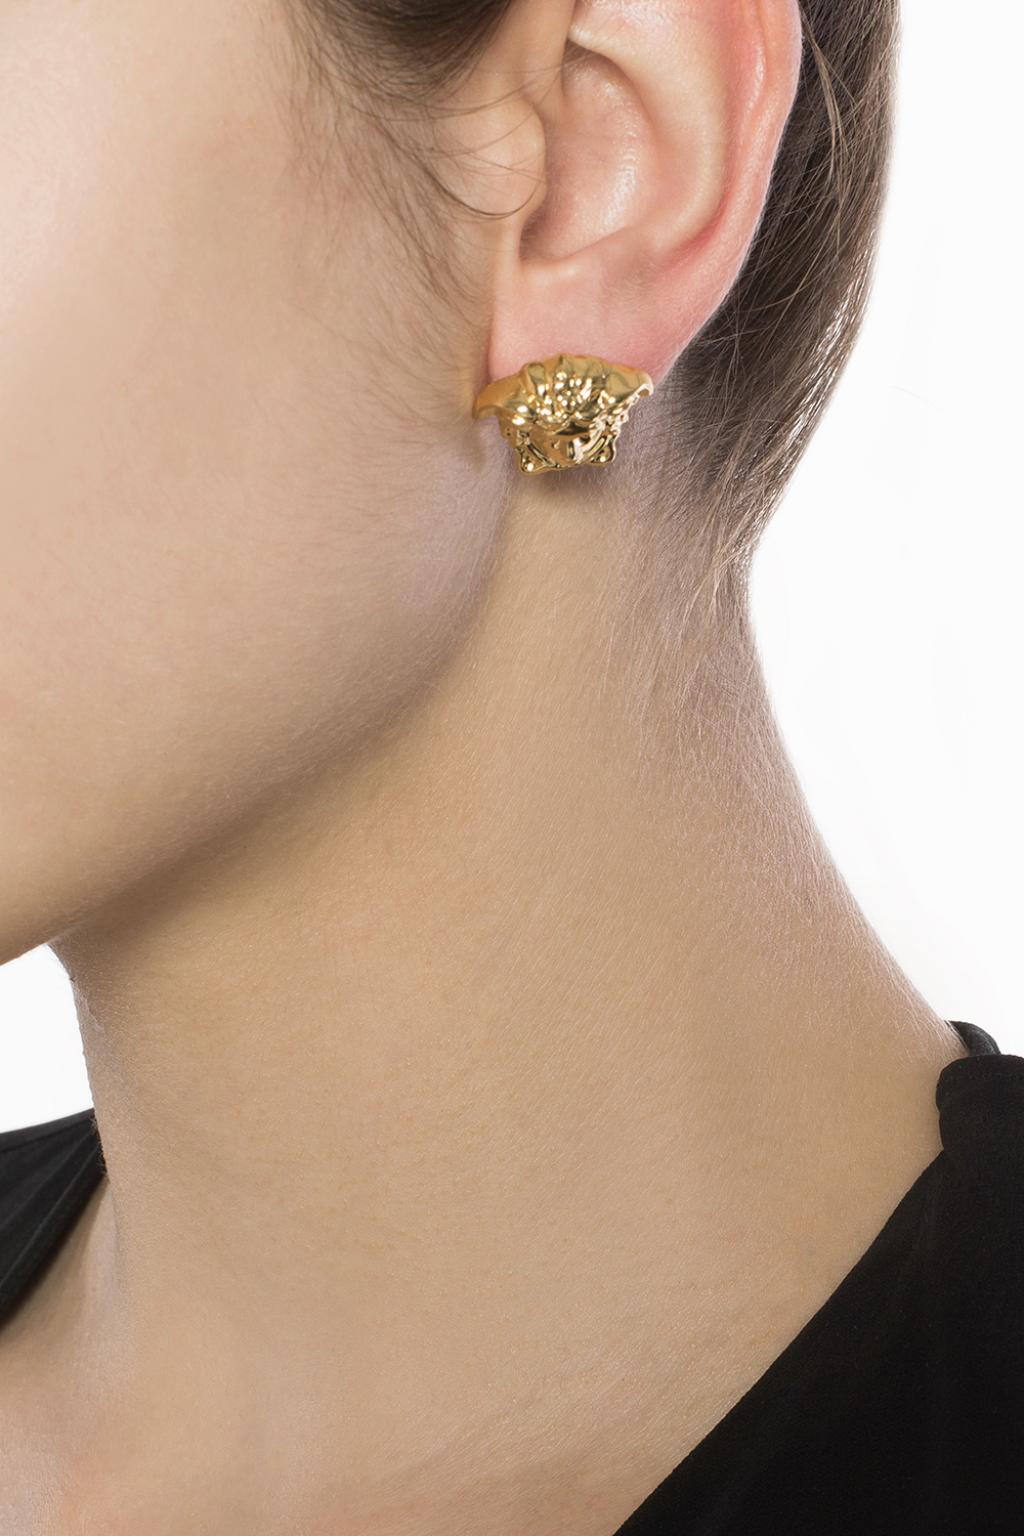 versace medusa head earrings